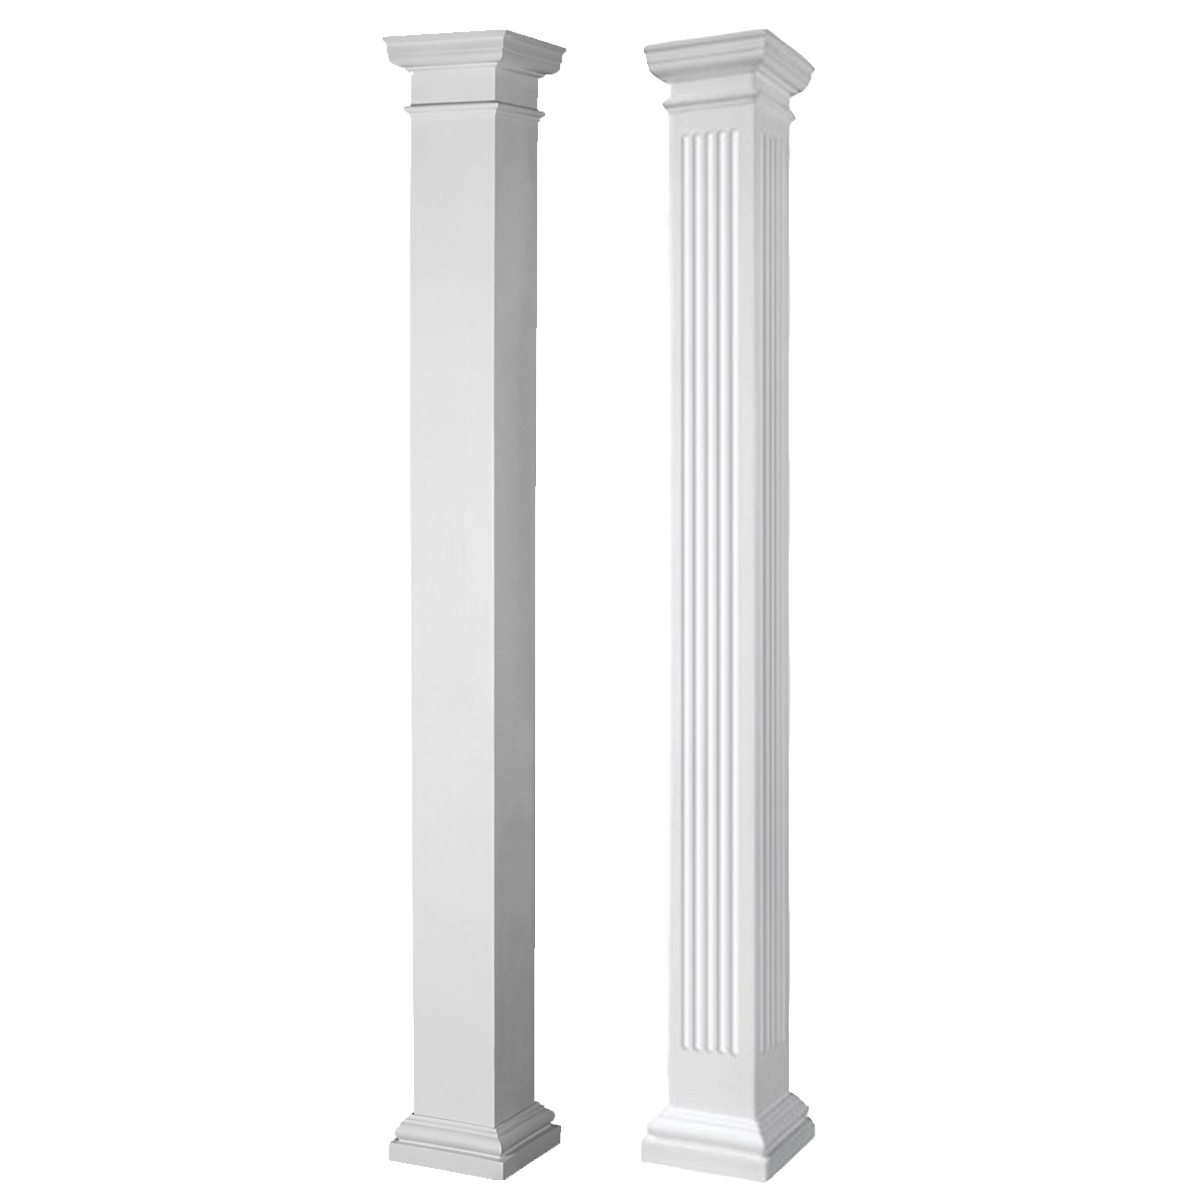 Square Fiberglass Columns